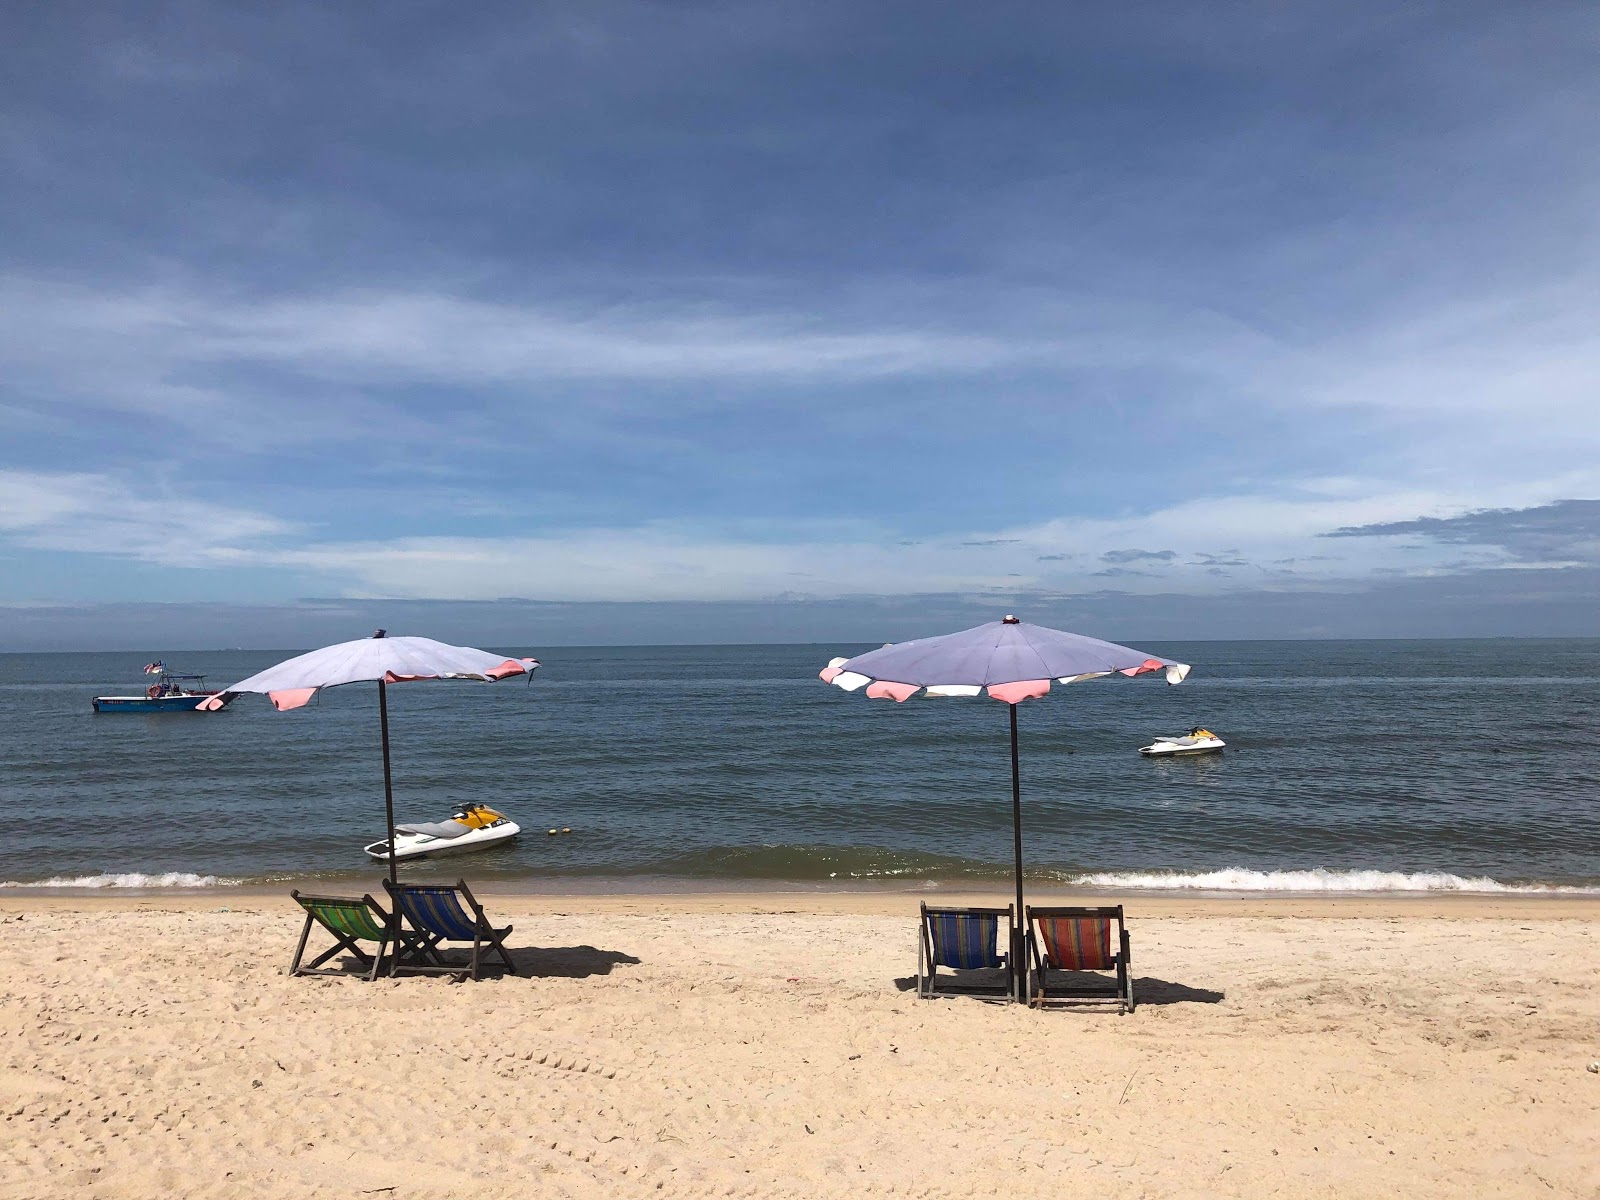 Foto de Tanjung Bungah Beach - lugar popular entre os apreciadores de relaxamento